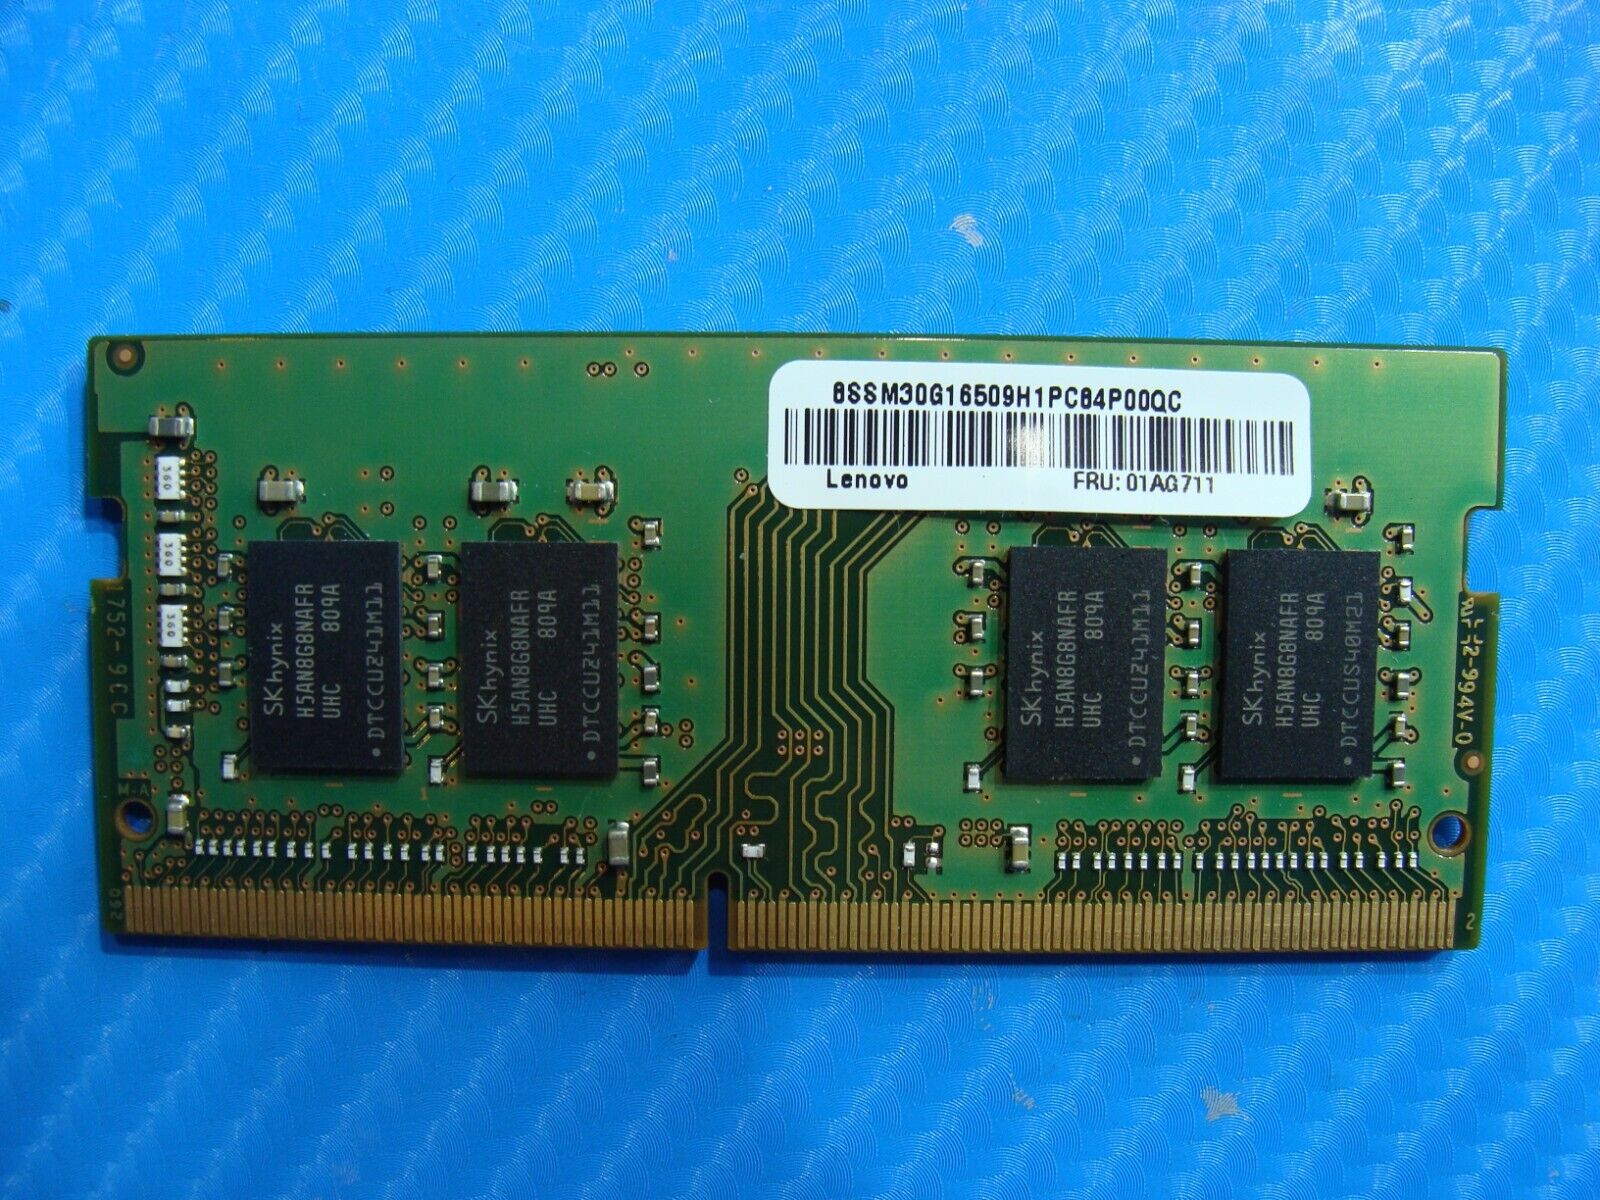 Lenovo x270 SK Hynix 8GB 1Rx8 PC4-2400T Memory RAM SO-DIMM HMA81GS6AFRN-UH